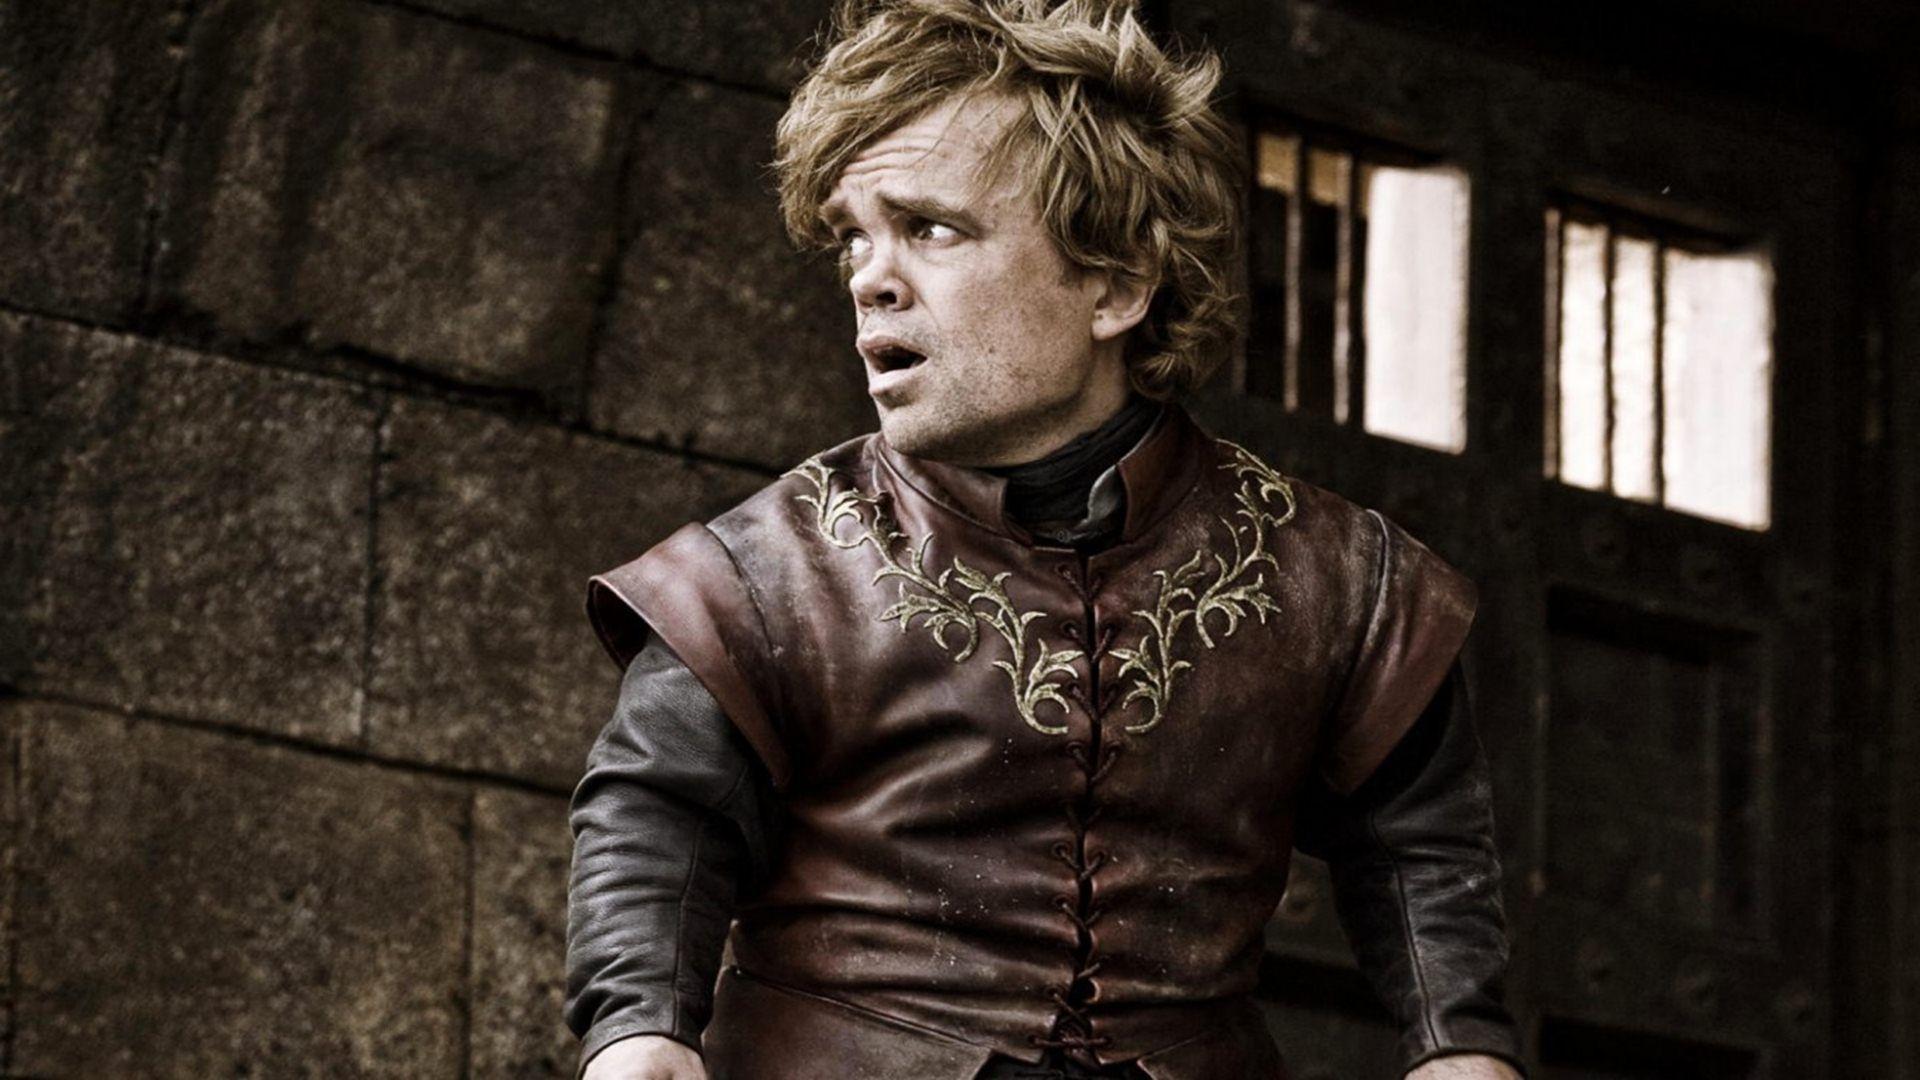 The popular actor Peter Dinklage or Tyrion Lannister wallpaper